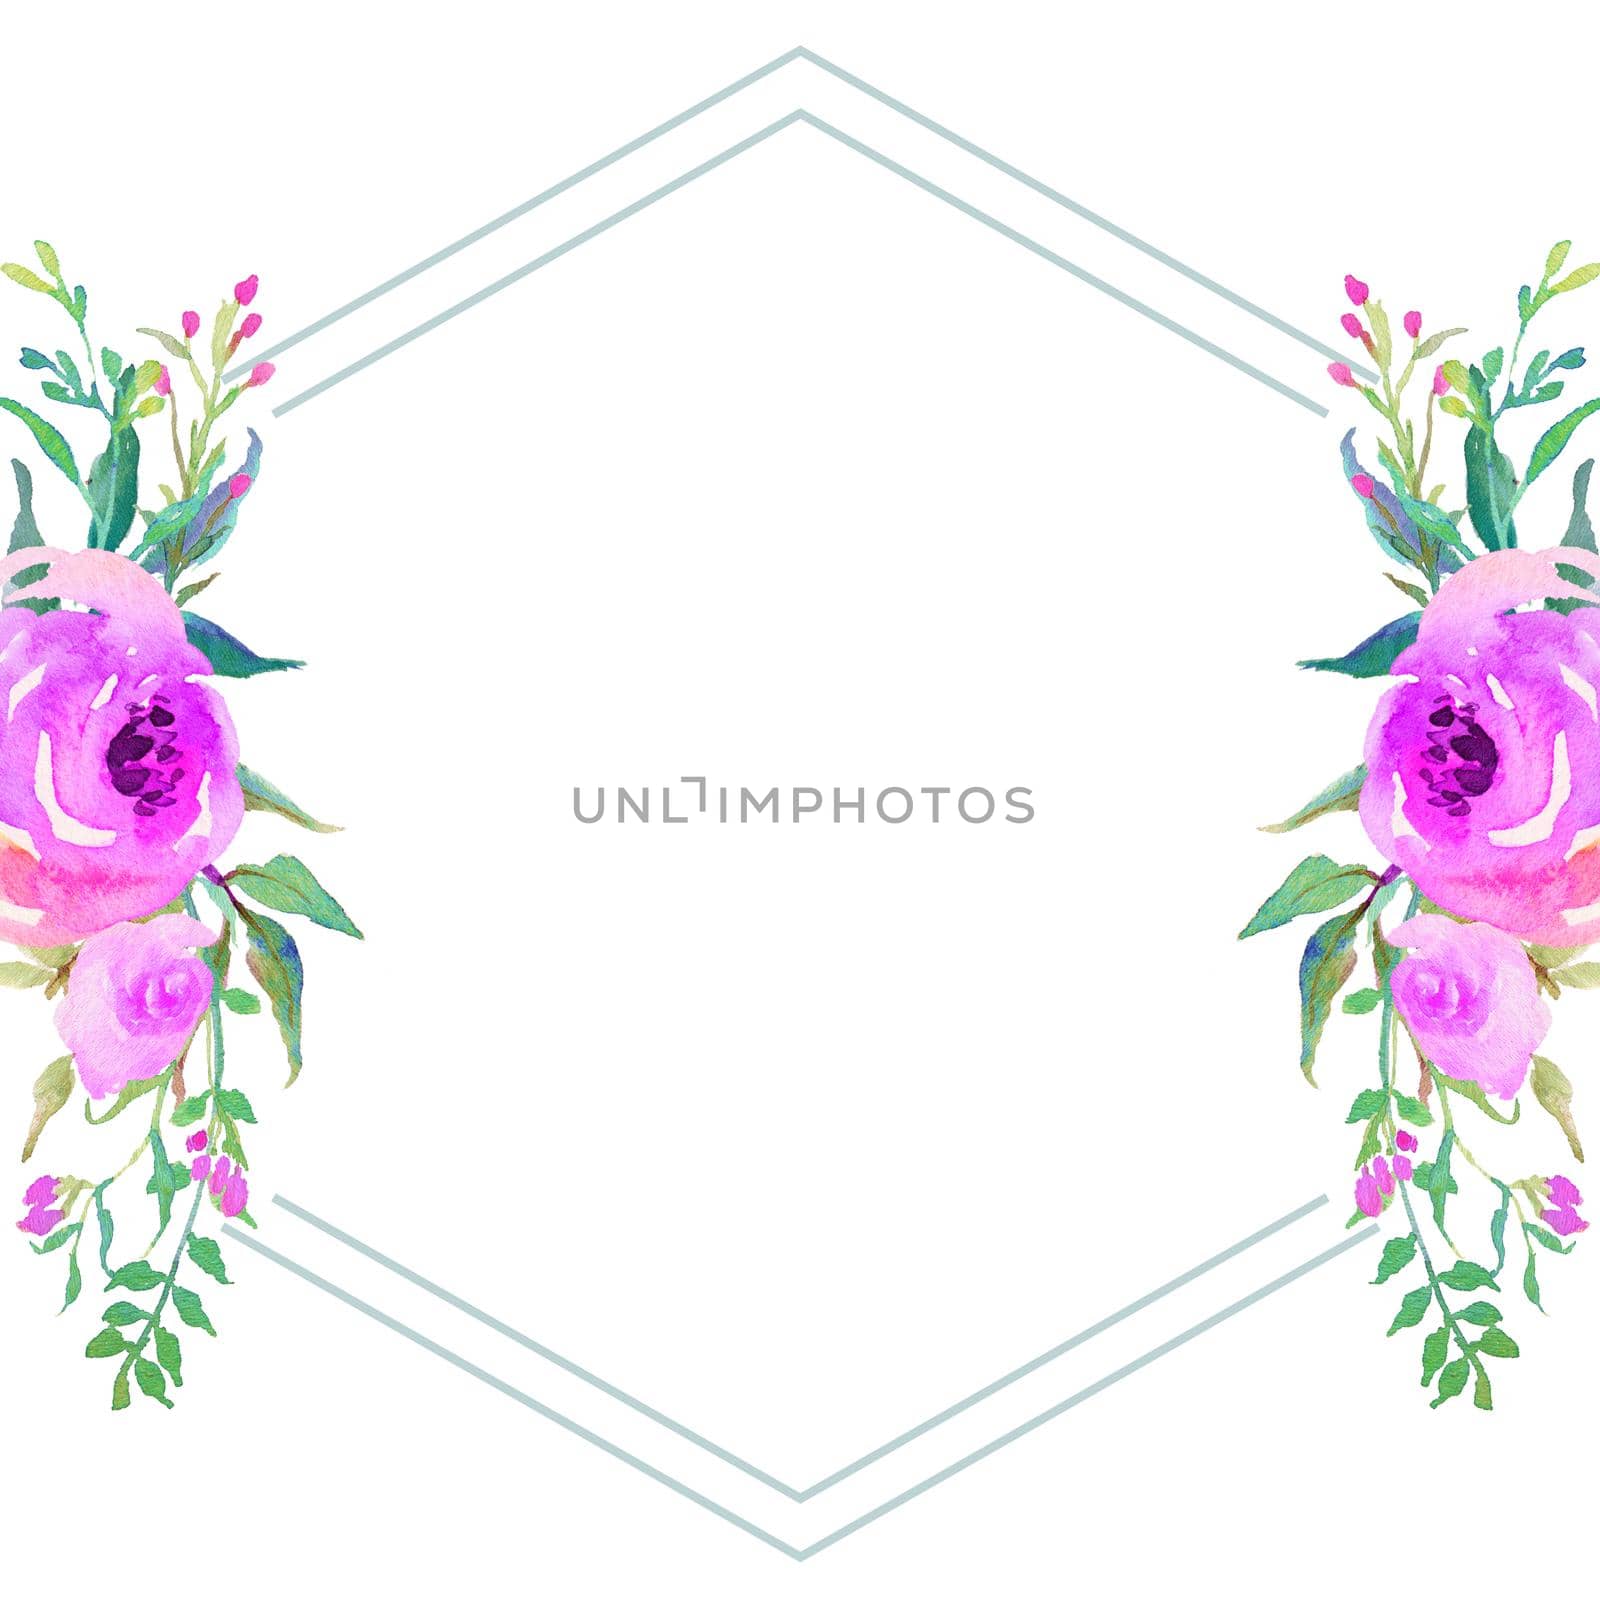 watercolor flower frame border. Floral wedding invitation elegant invitation card design on white background by ANITA